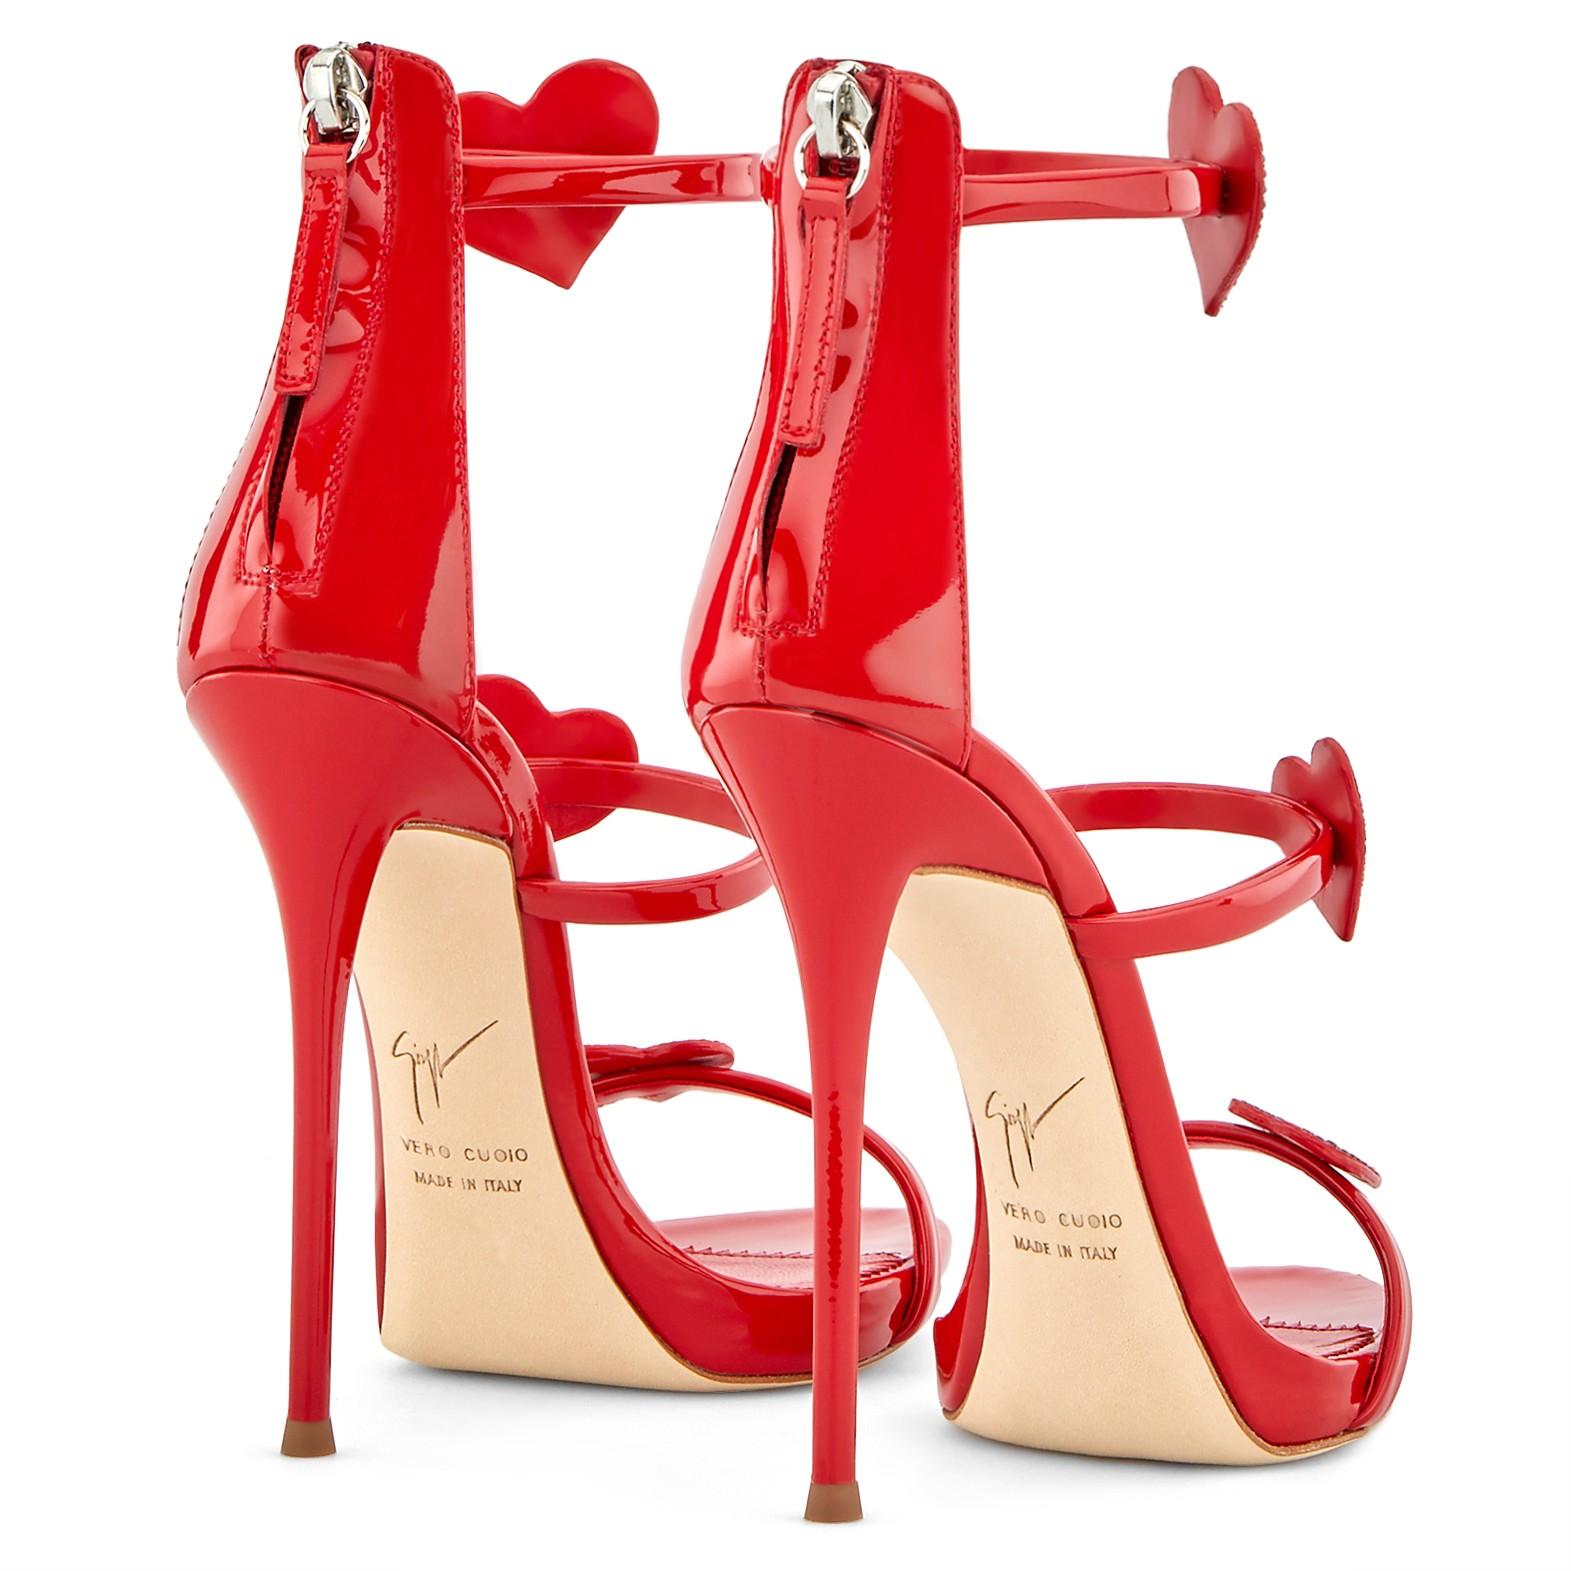 Women's Giuseppe Zanotti NEW Red Patent Heart Crystal Evening Sandals Heels in Box IT 41